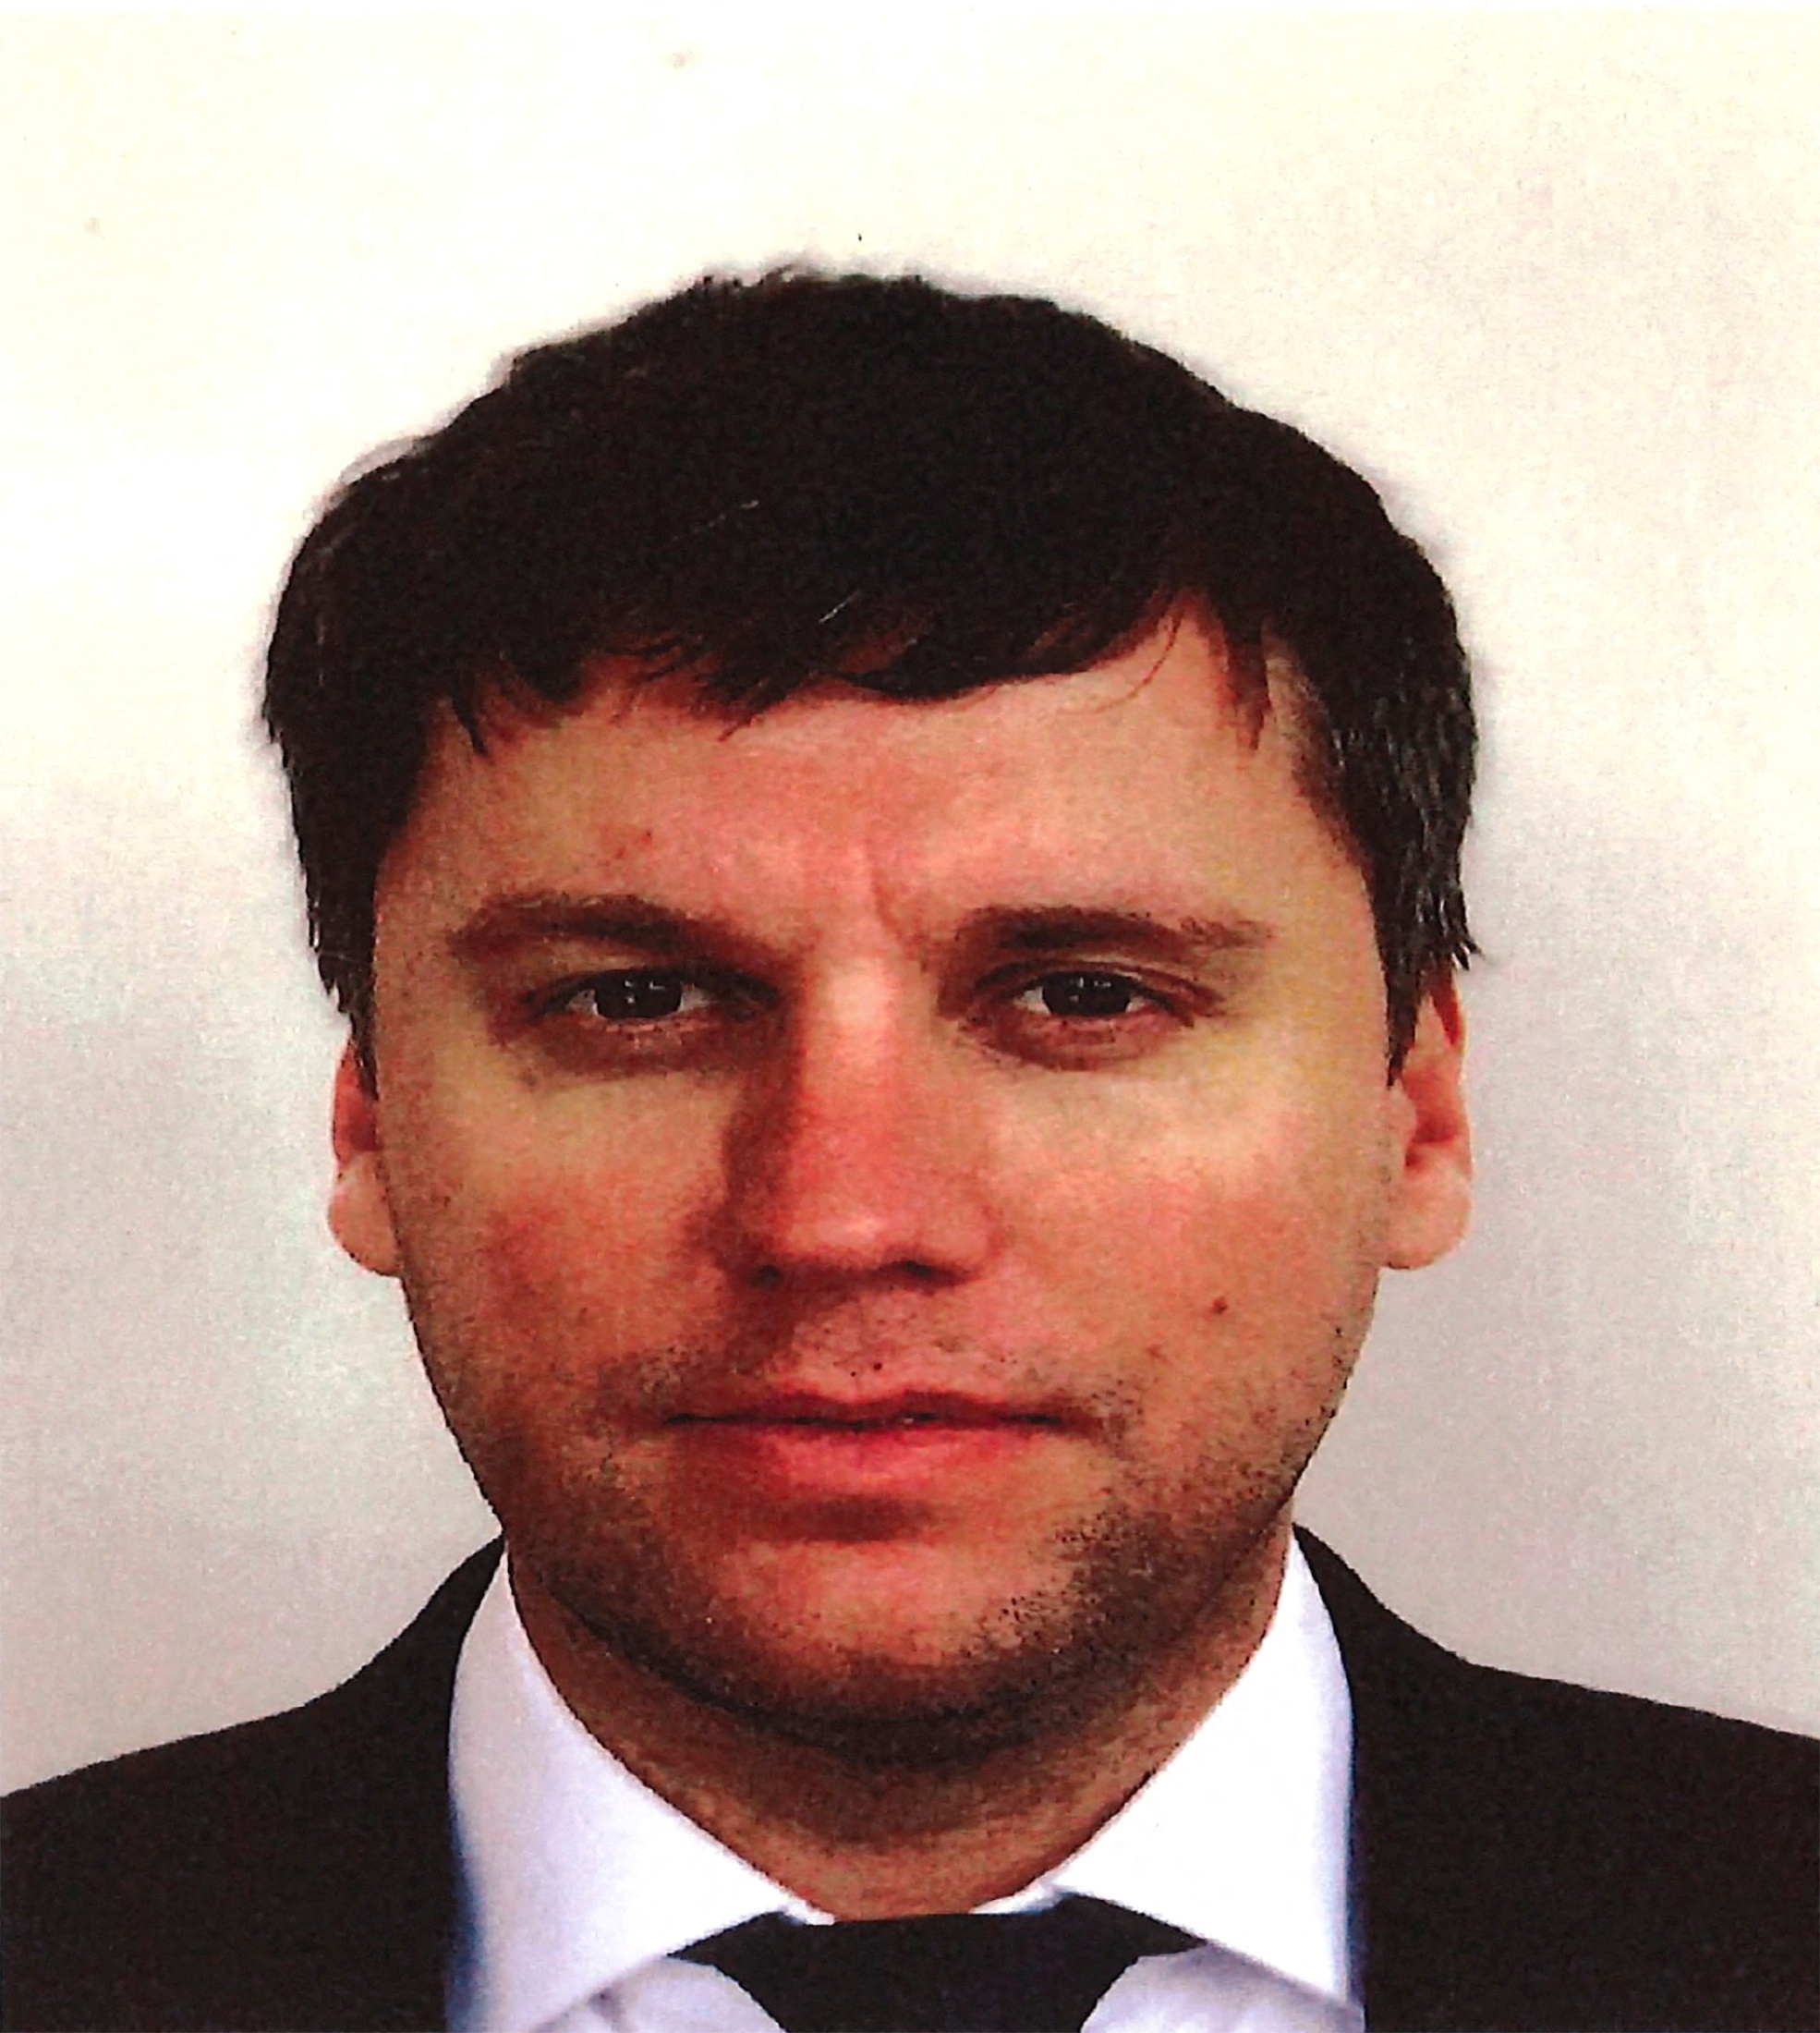 Vladislav Klyushin, an owner of an information technology company